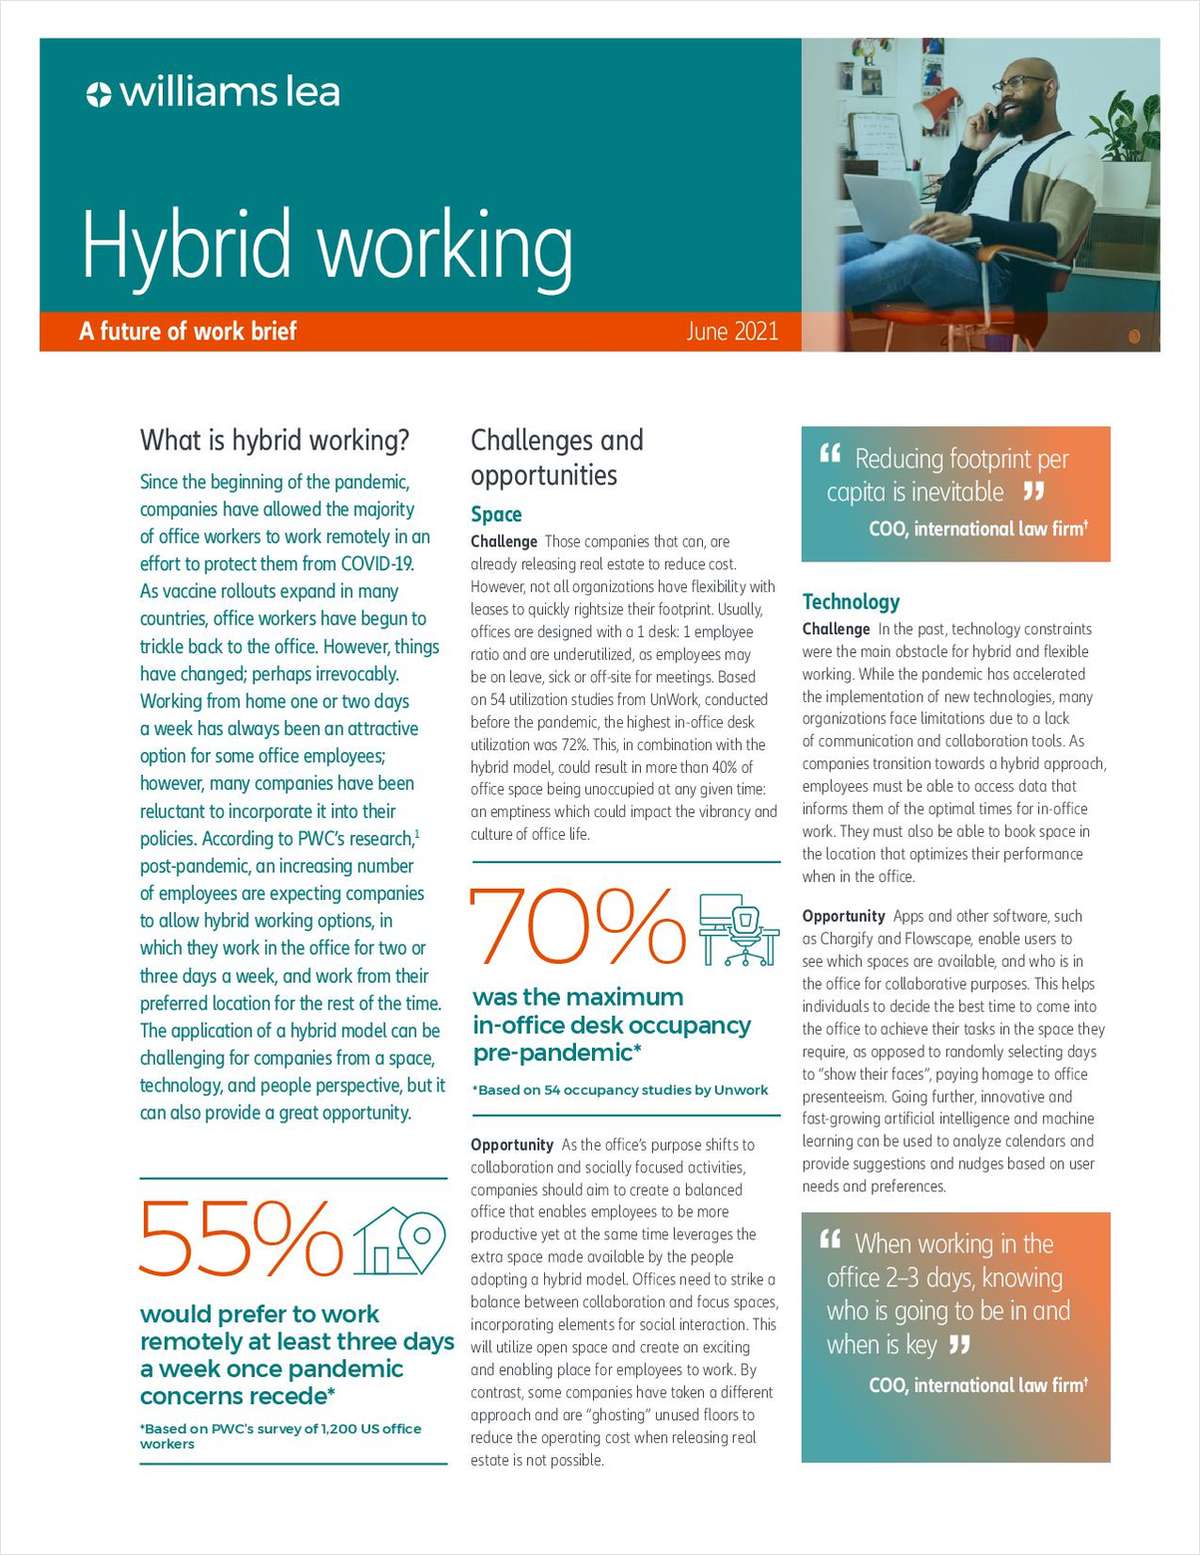 Hybrid Working: A Future of Work Brief